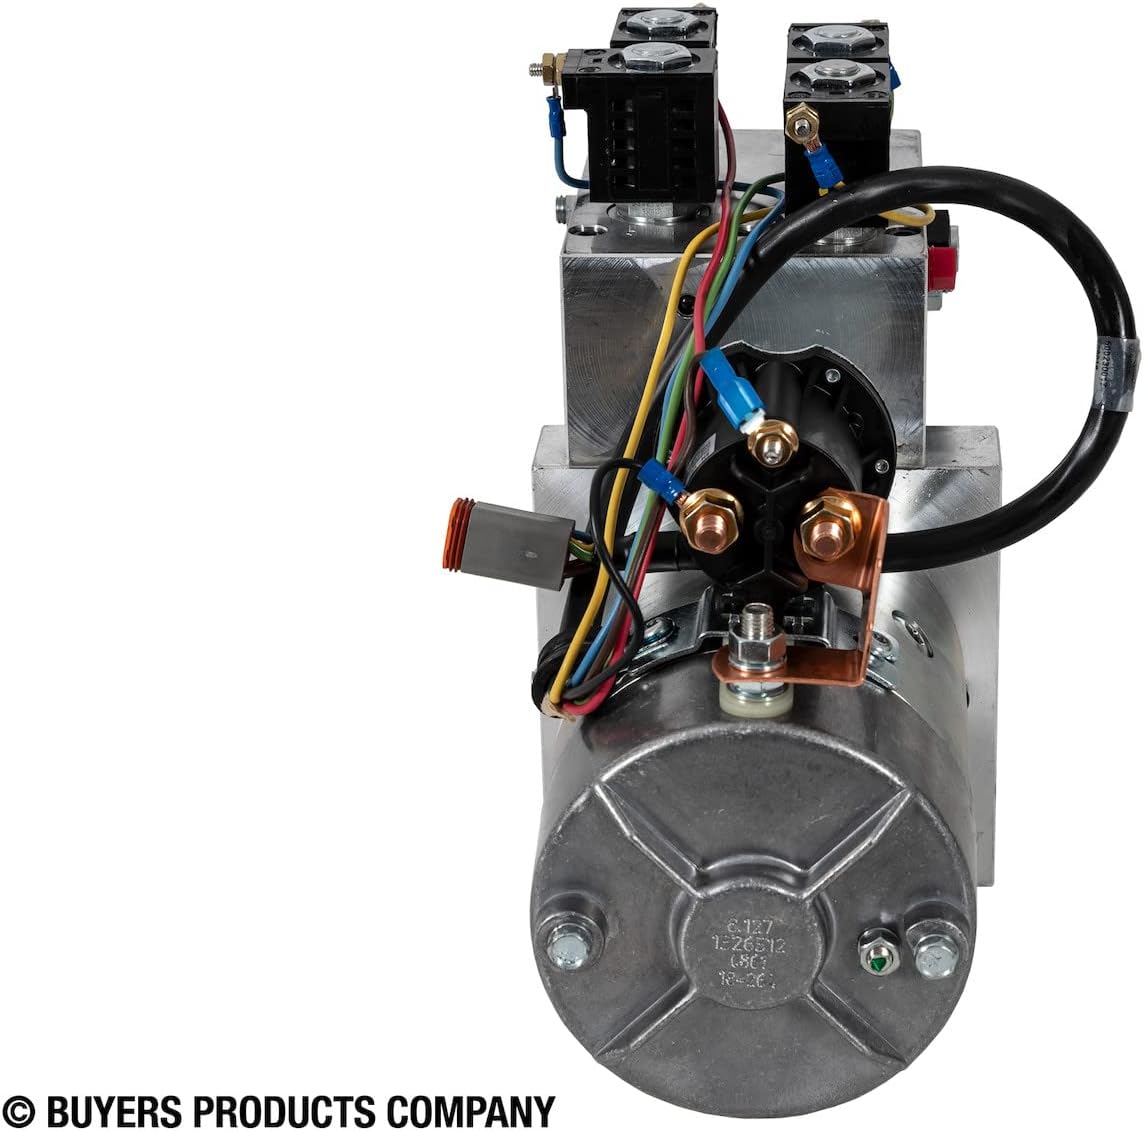 Buyers PU3593 Hydraulic 4-Way/3-Way Valve 12 Volt DC Plow Power Unit - 1.3 Quart Reservoir